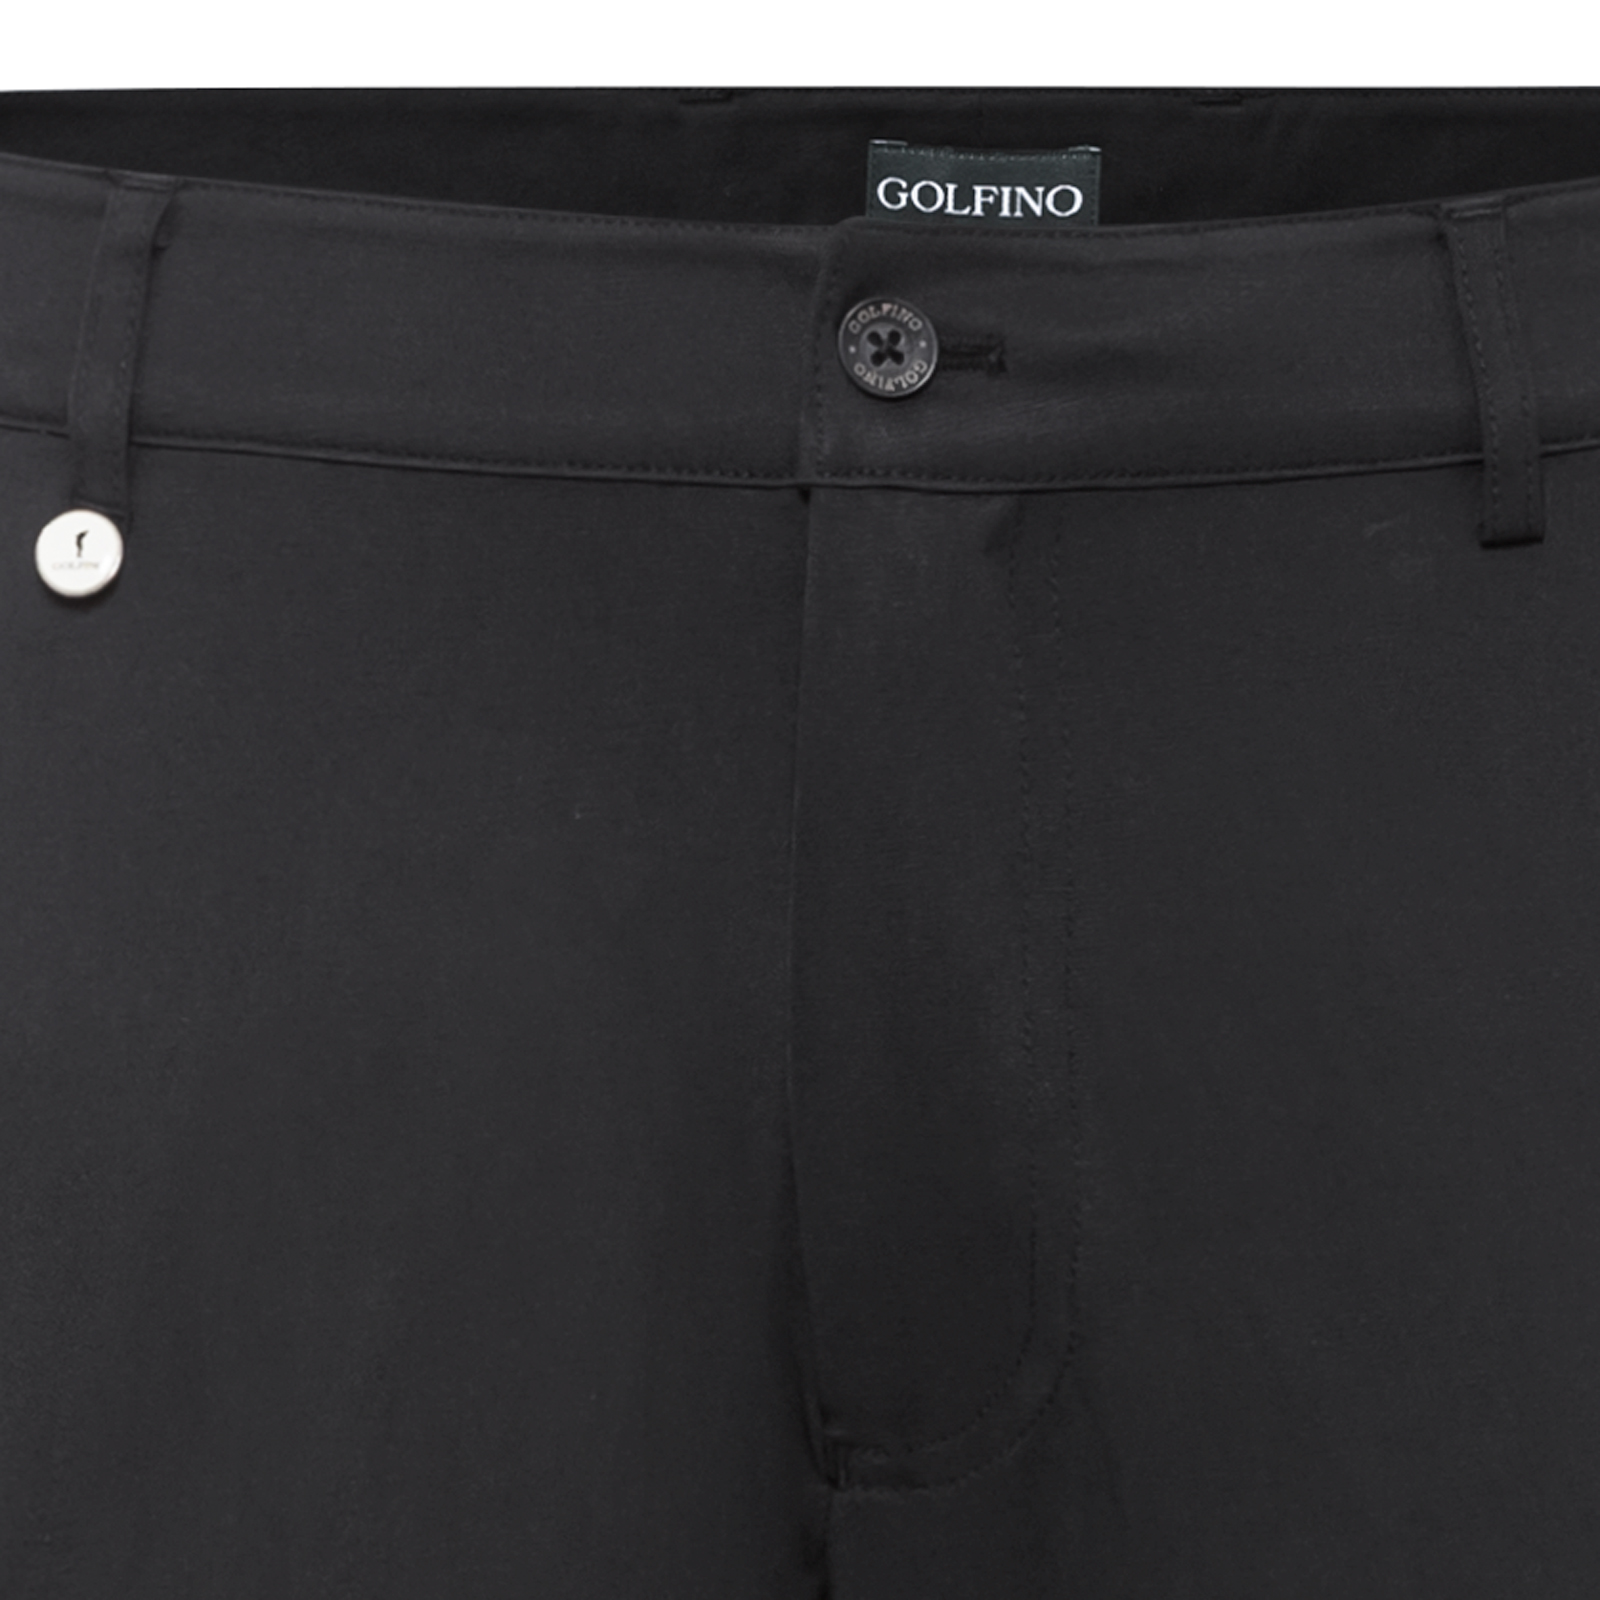 Men's quick dry golf trousers